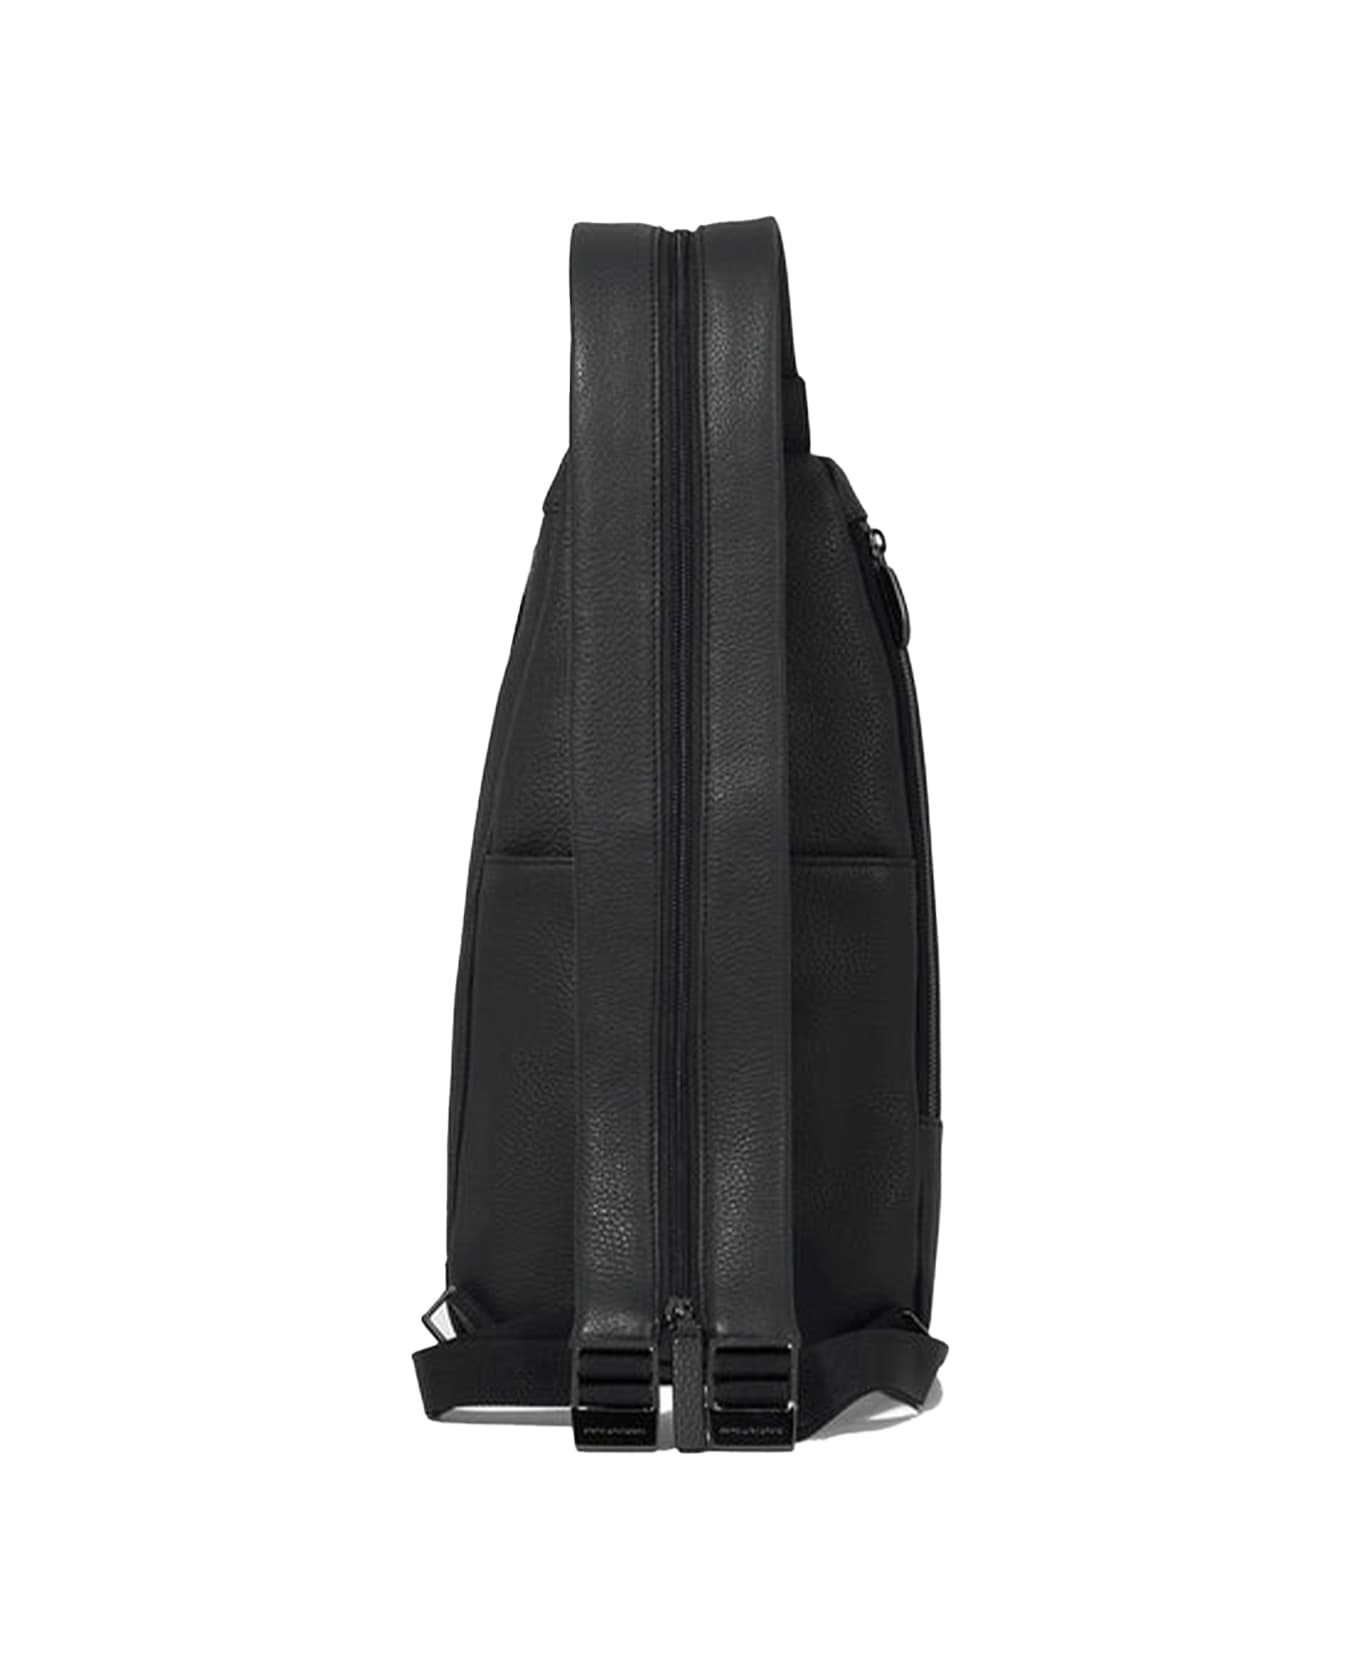 Piquadro Shoulder Bag For Ipad Mini, Portable As A Backpack - NERO ベルトバッグ